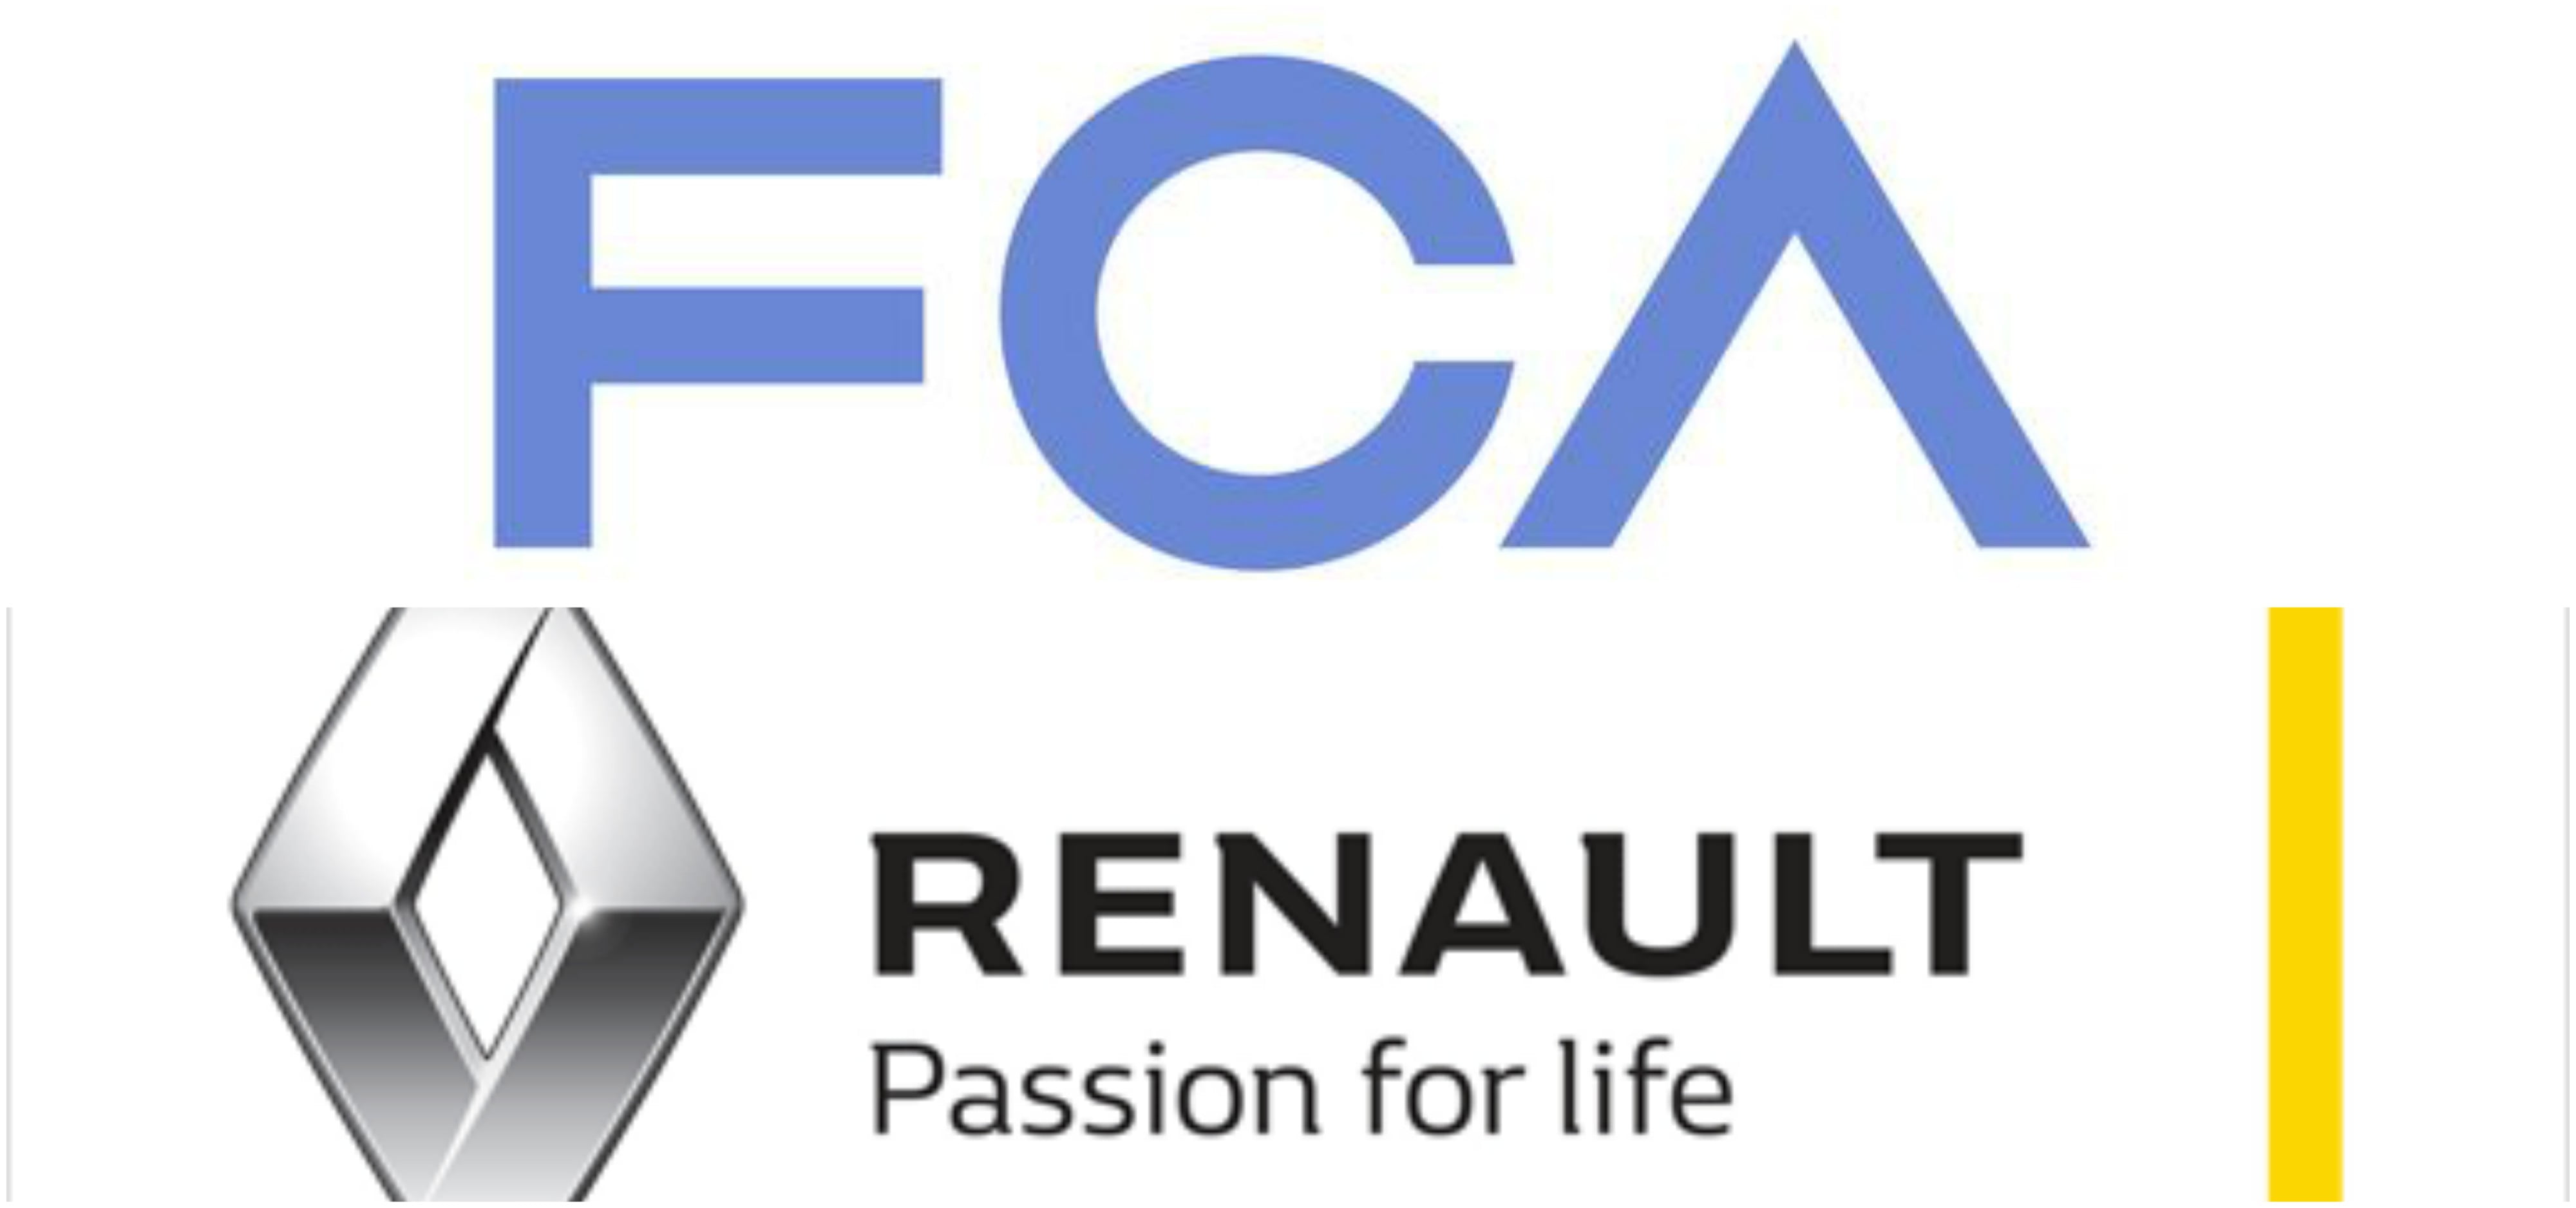 Alleanza FCA Renault Fiat Chrysler Automobiles